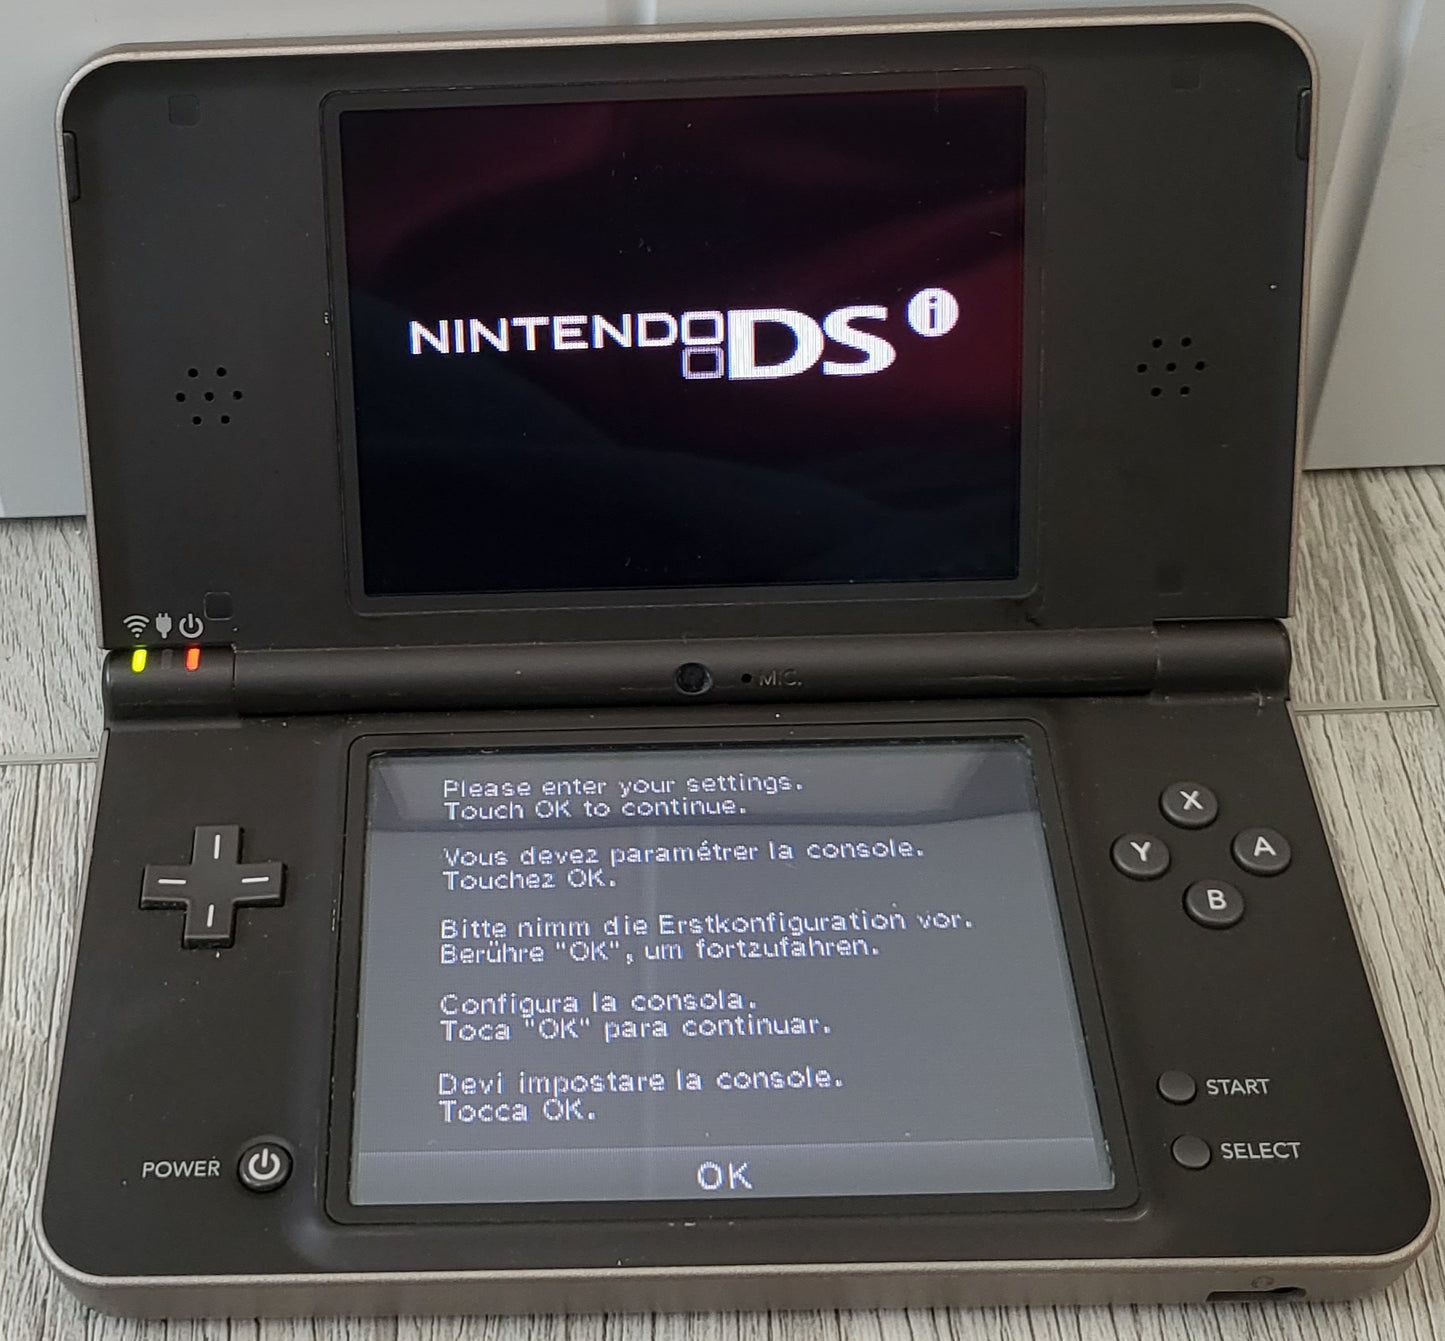 Nintendo DSI XL Console